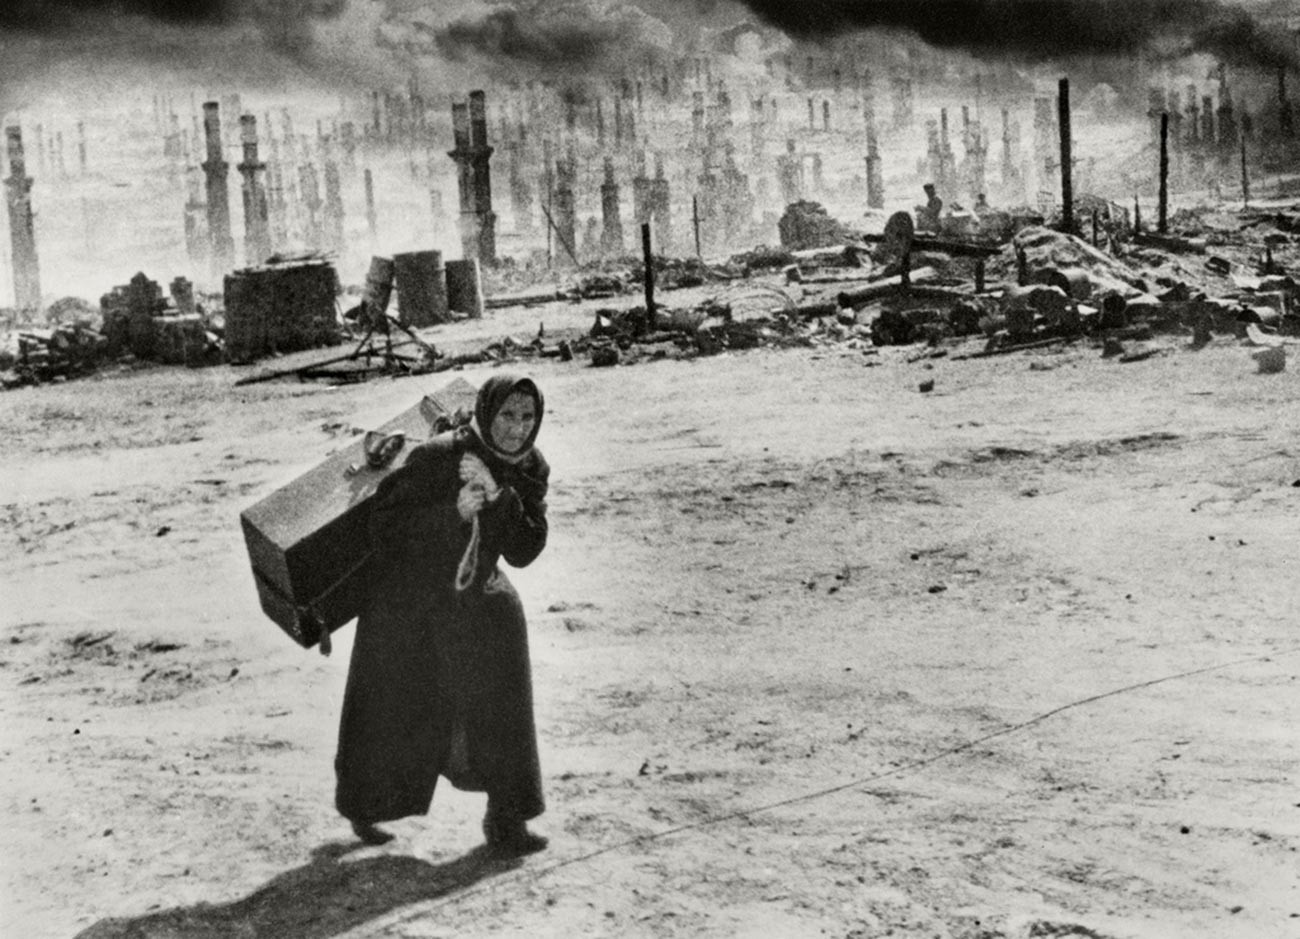 “El éxodo”, tras el bombardeo nazi de Múrmansk